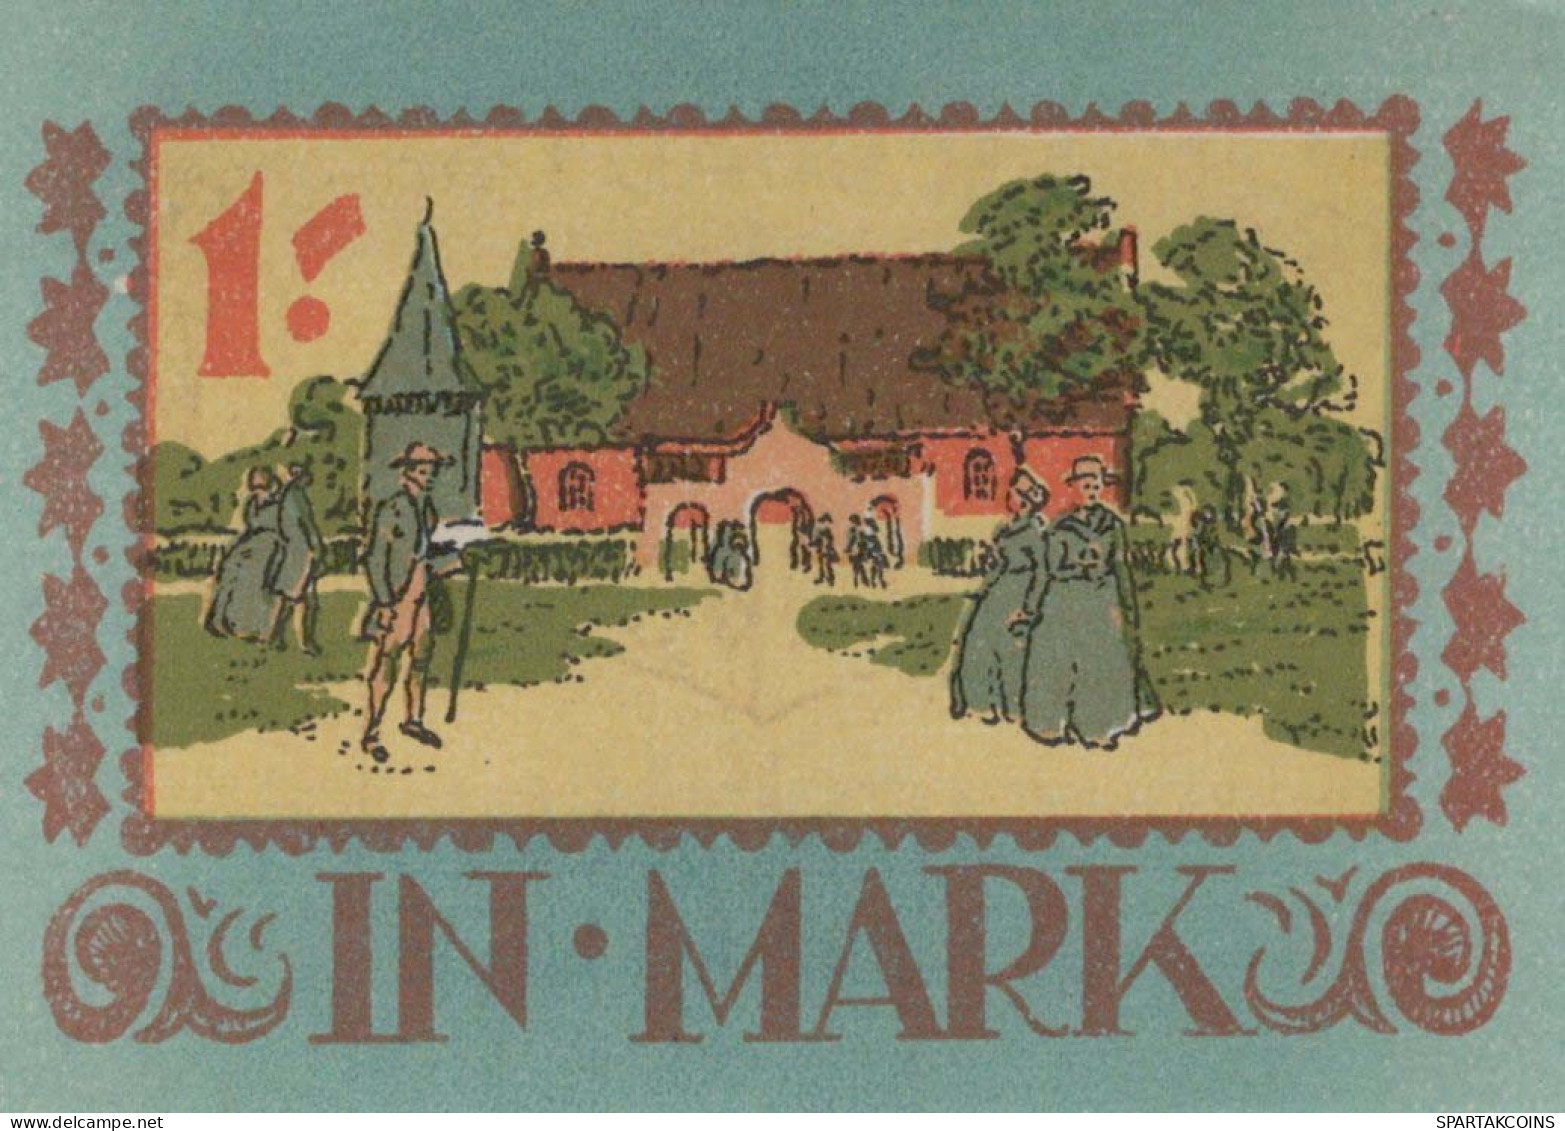 1 MARK 1922 Stadt LANGENHORN IN NORDFRIESLAND UNC DEUTSCHLAND #PB993 - [11] Local Banknote Issues